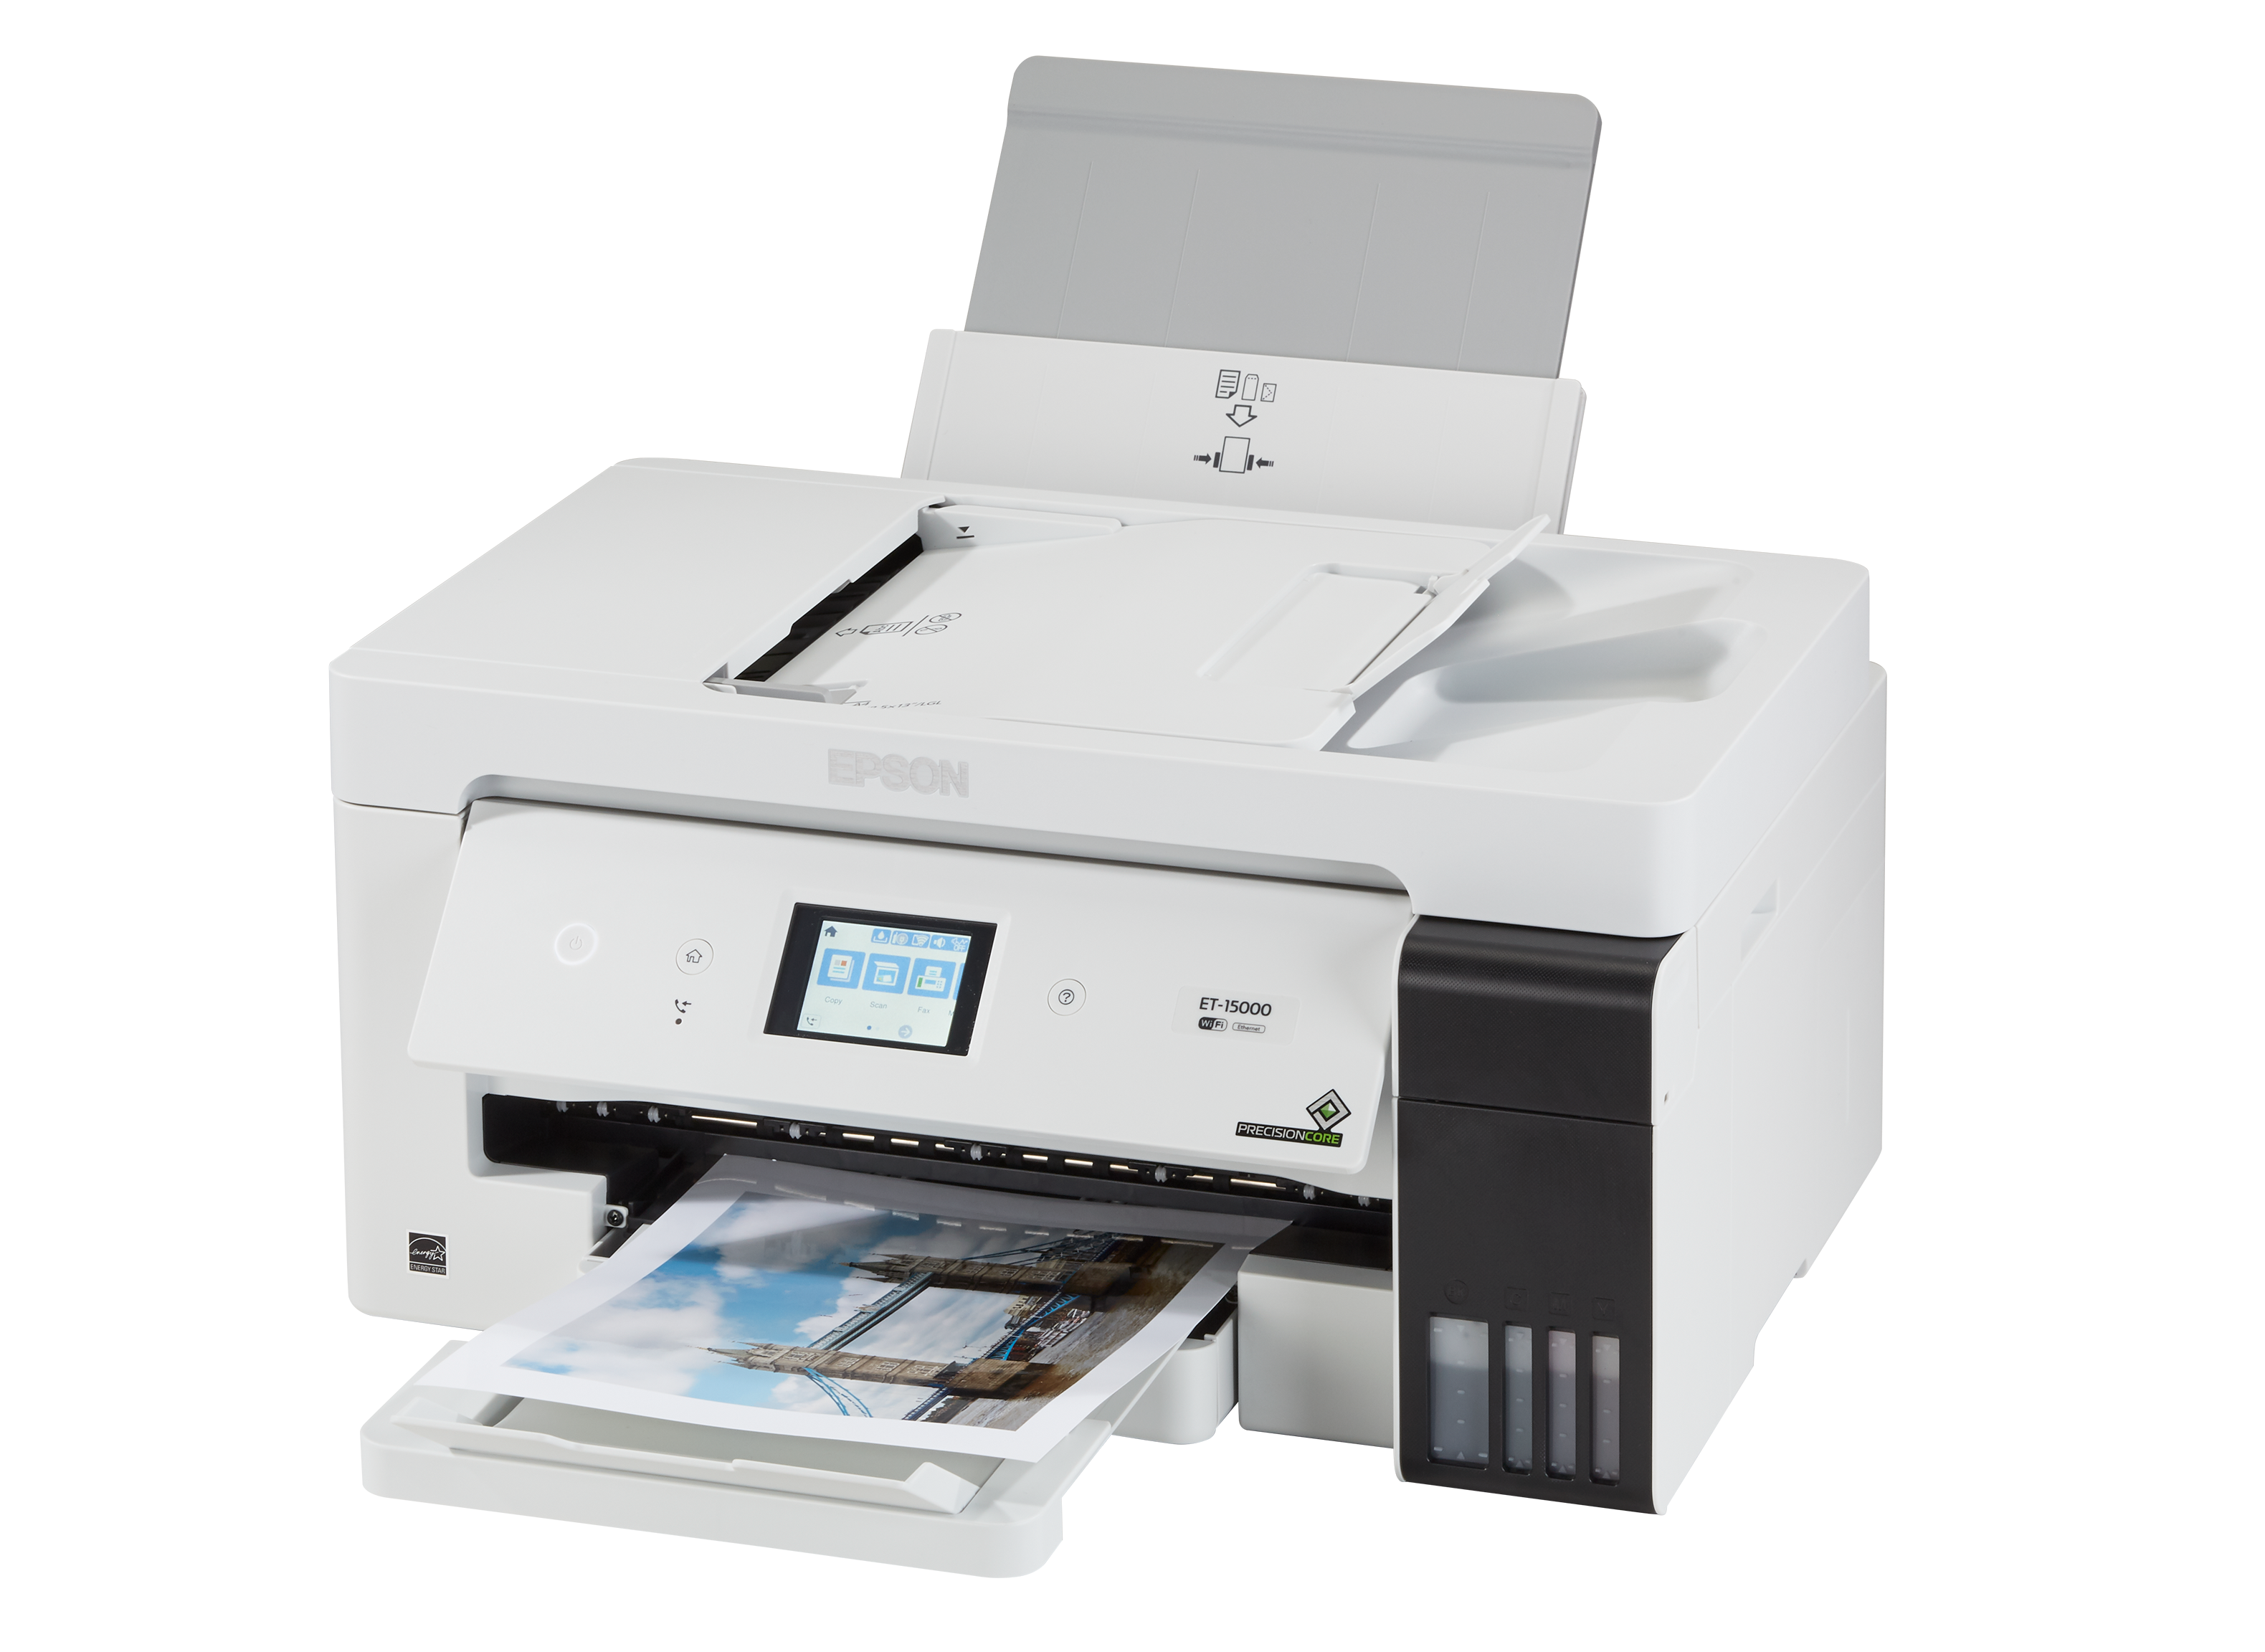 Epson EcoTank ET-15000 Printer Review - Consumer